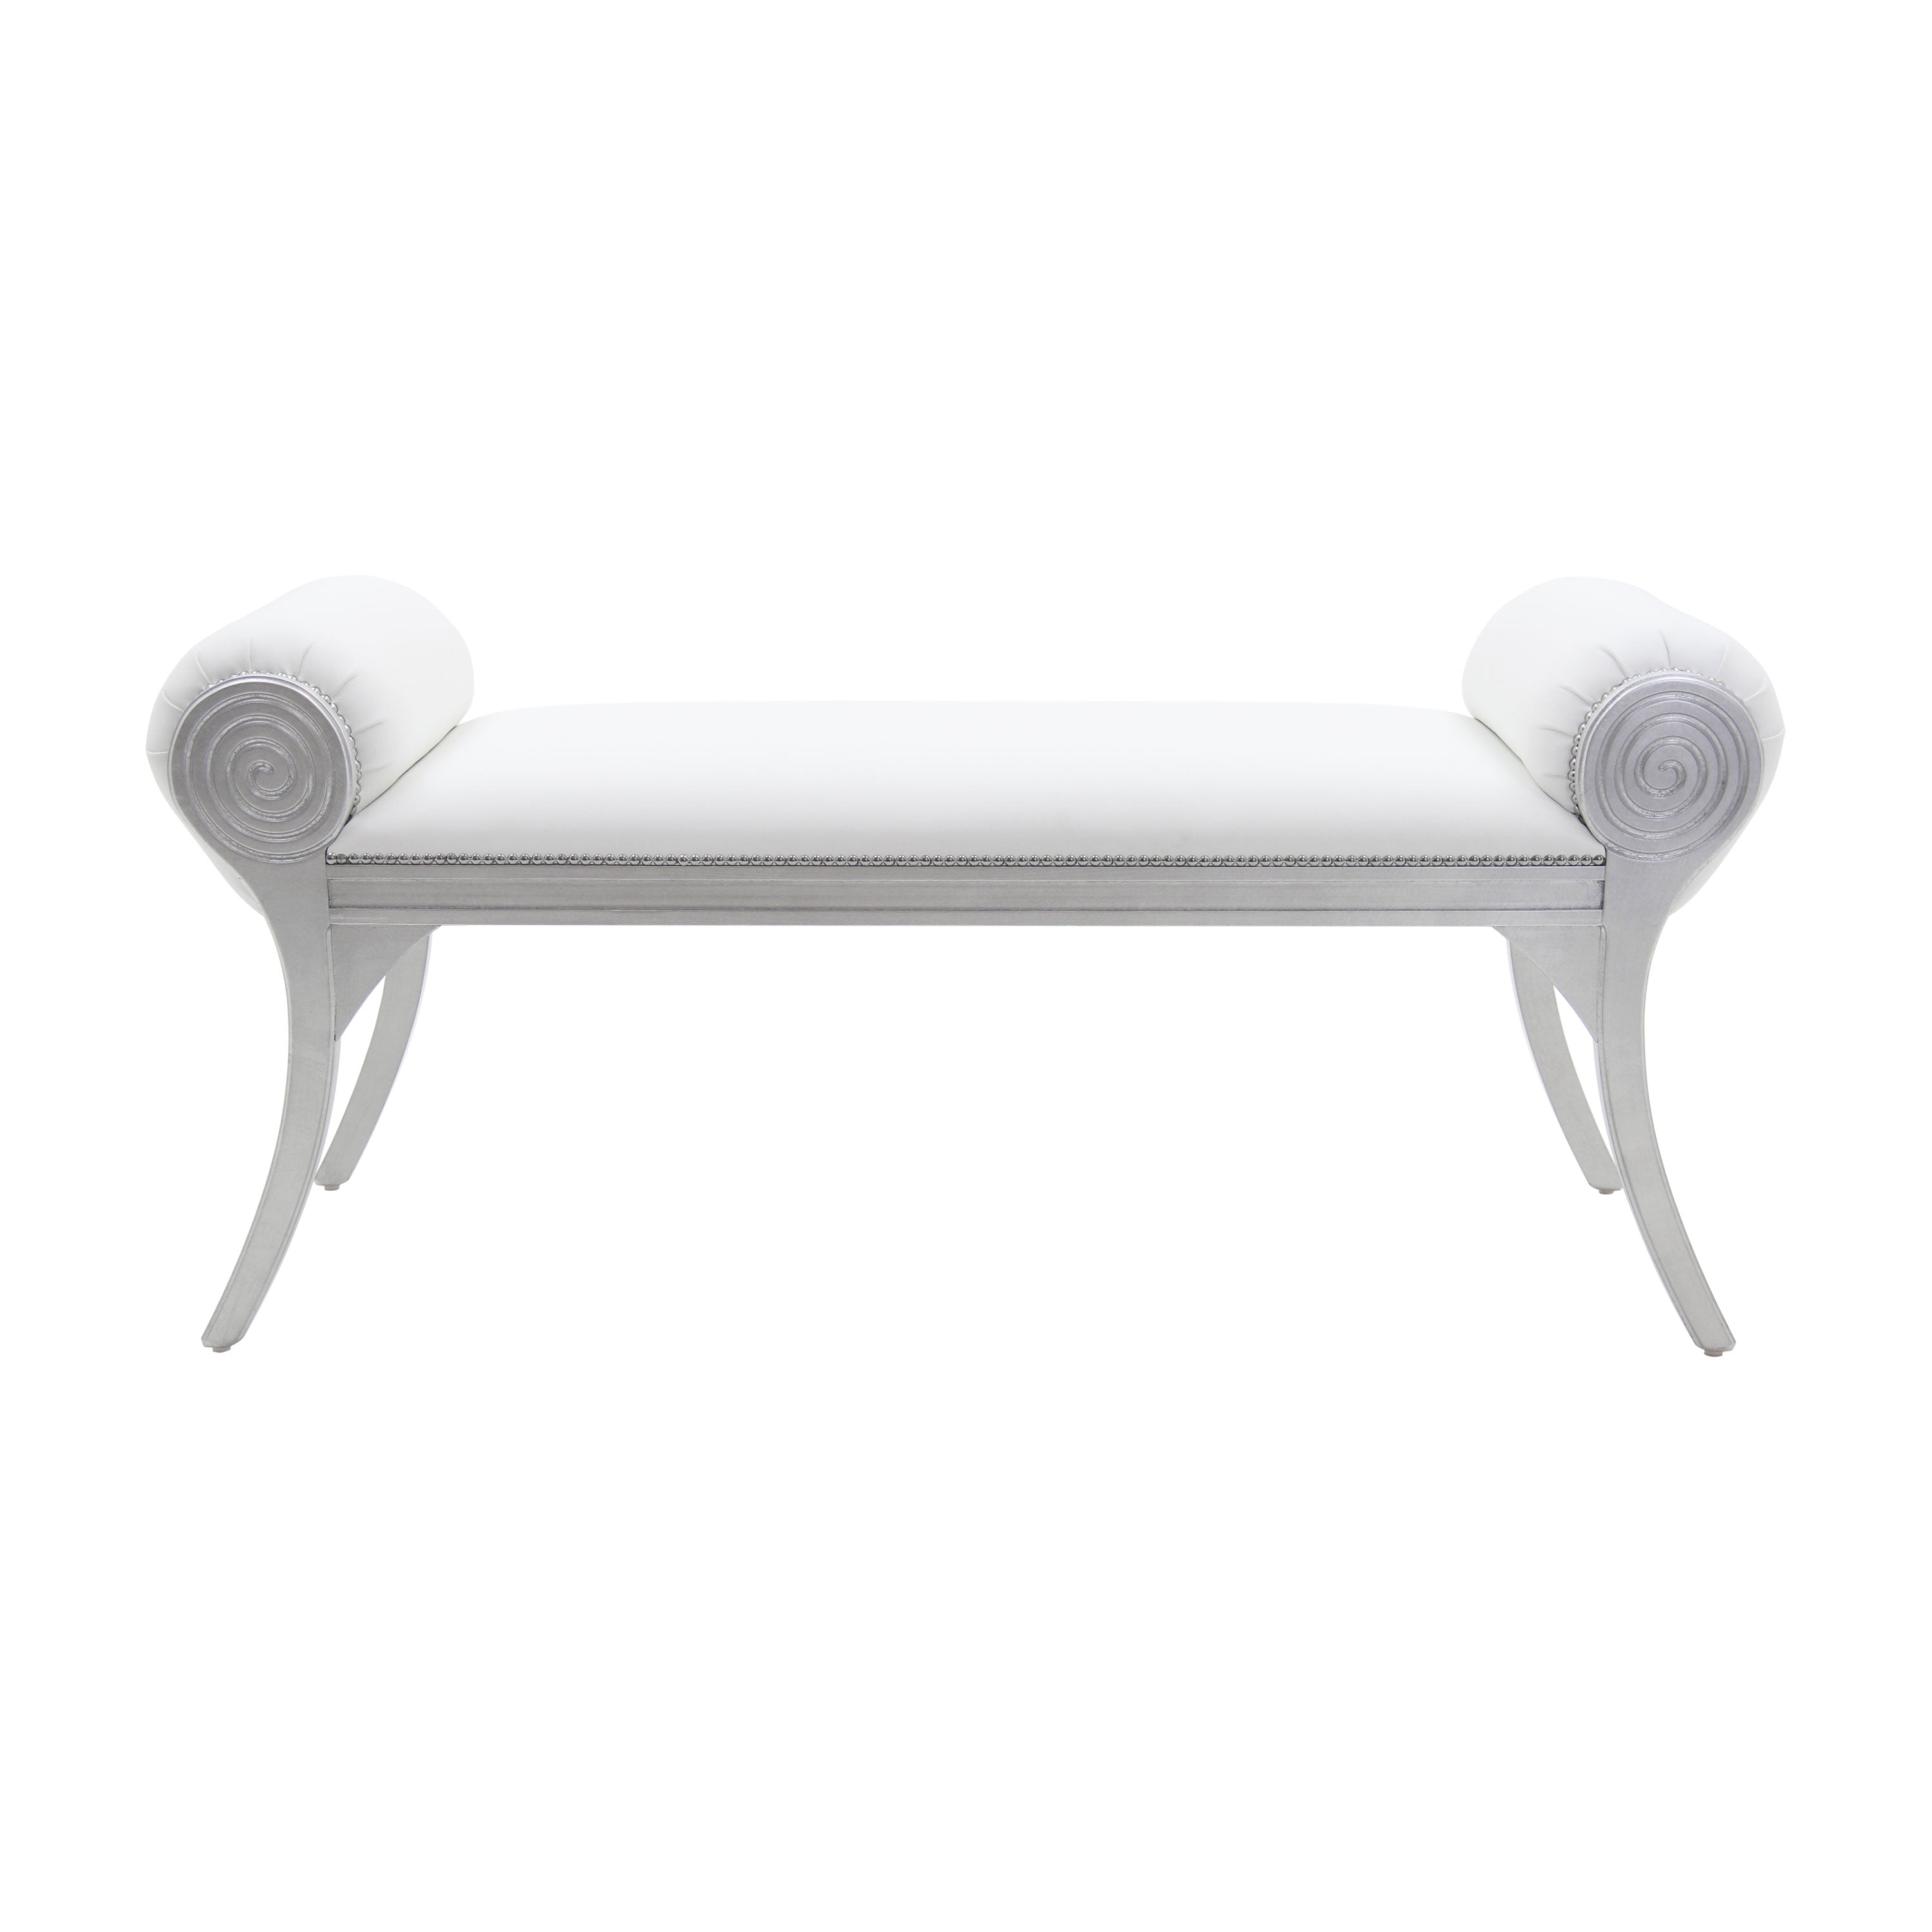 Crispun Bespoke Upholstered Luxury Statement Bench MS309Q Custom Made To Order